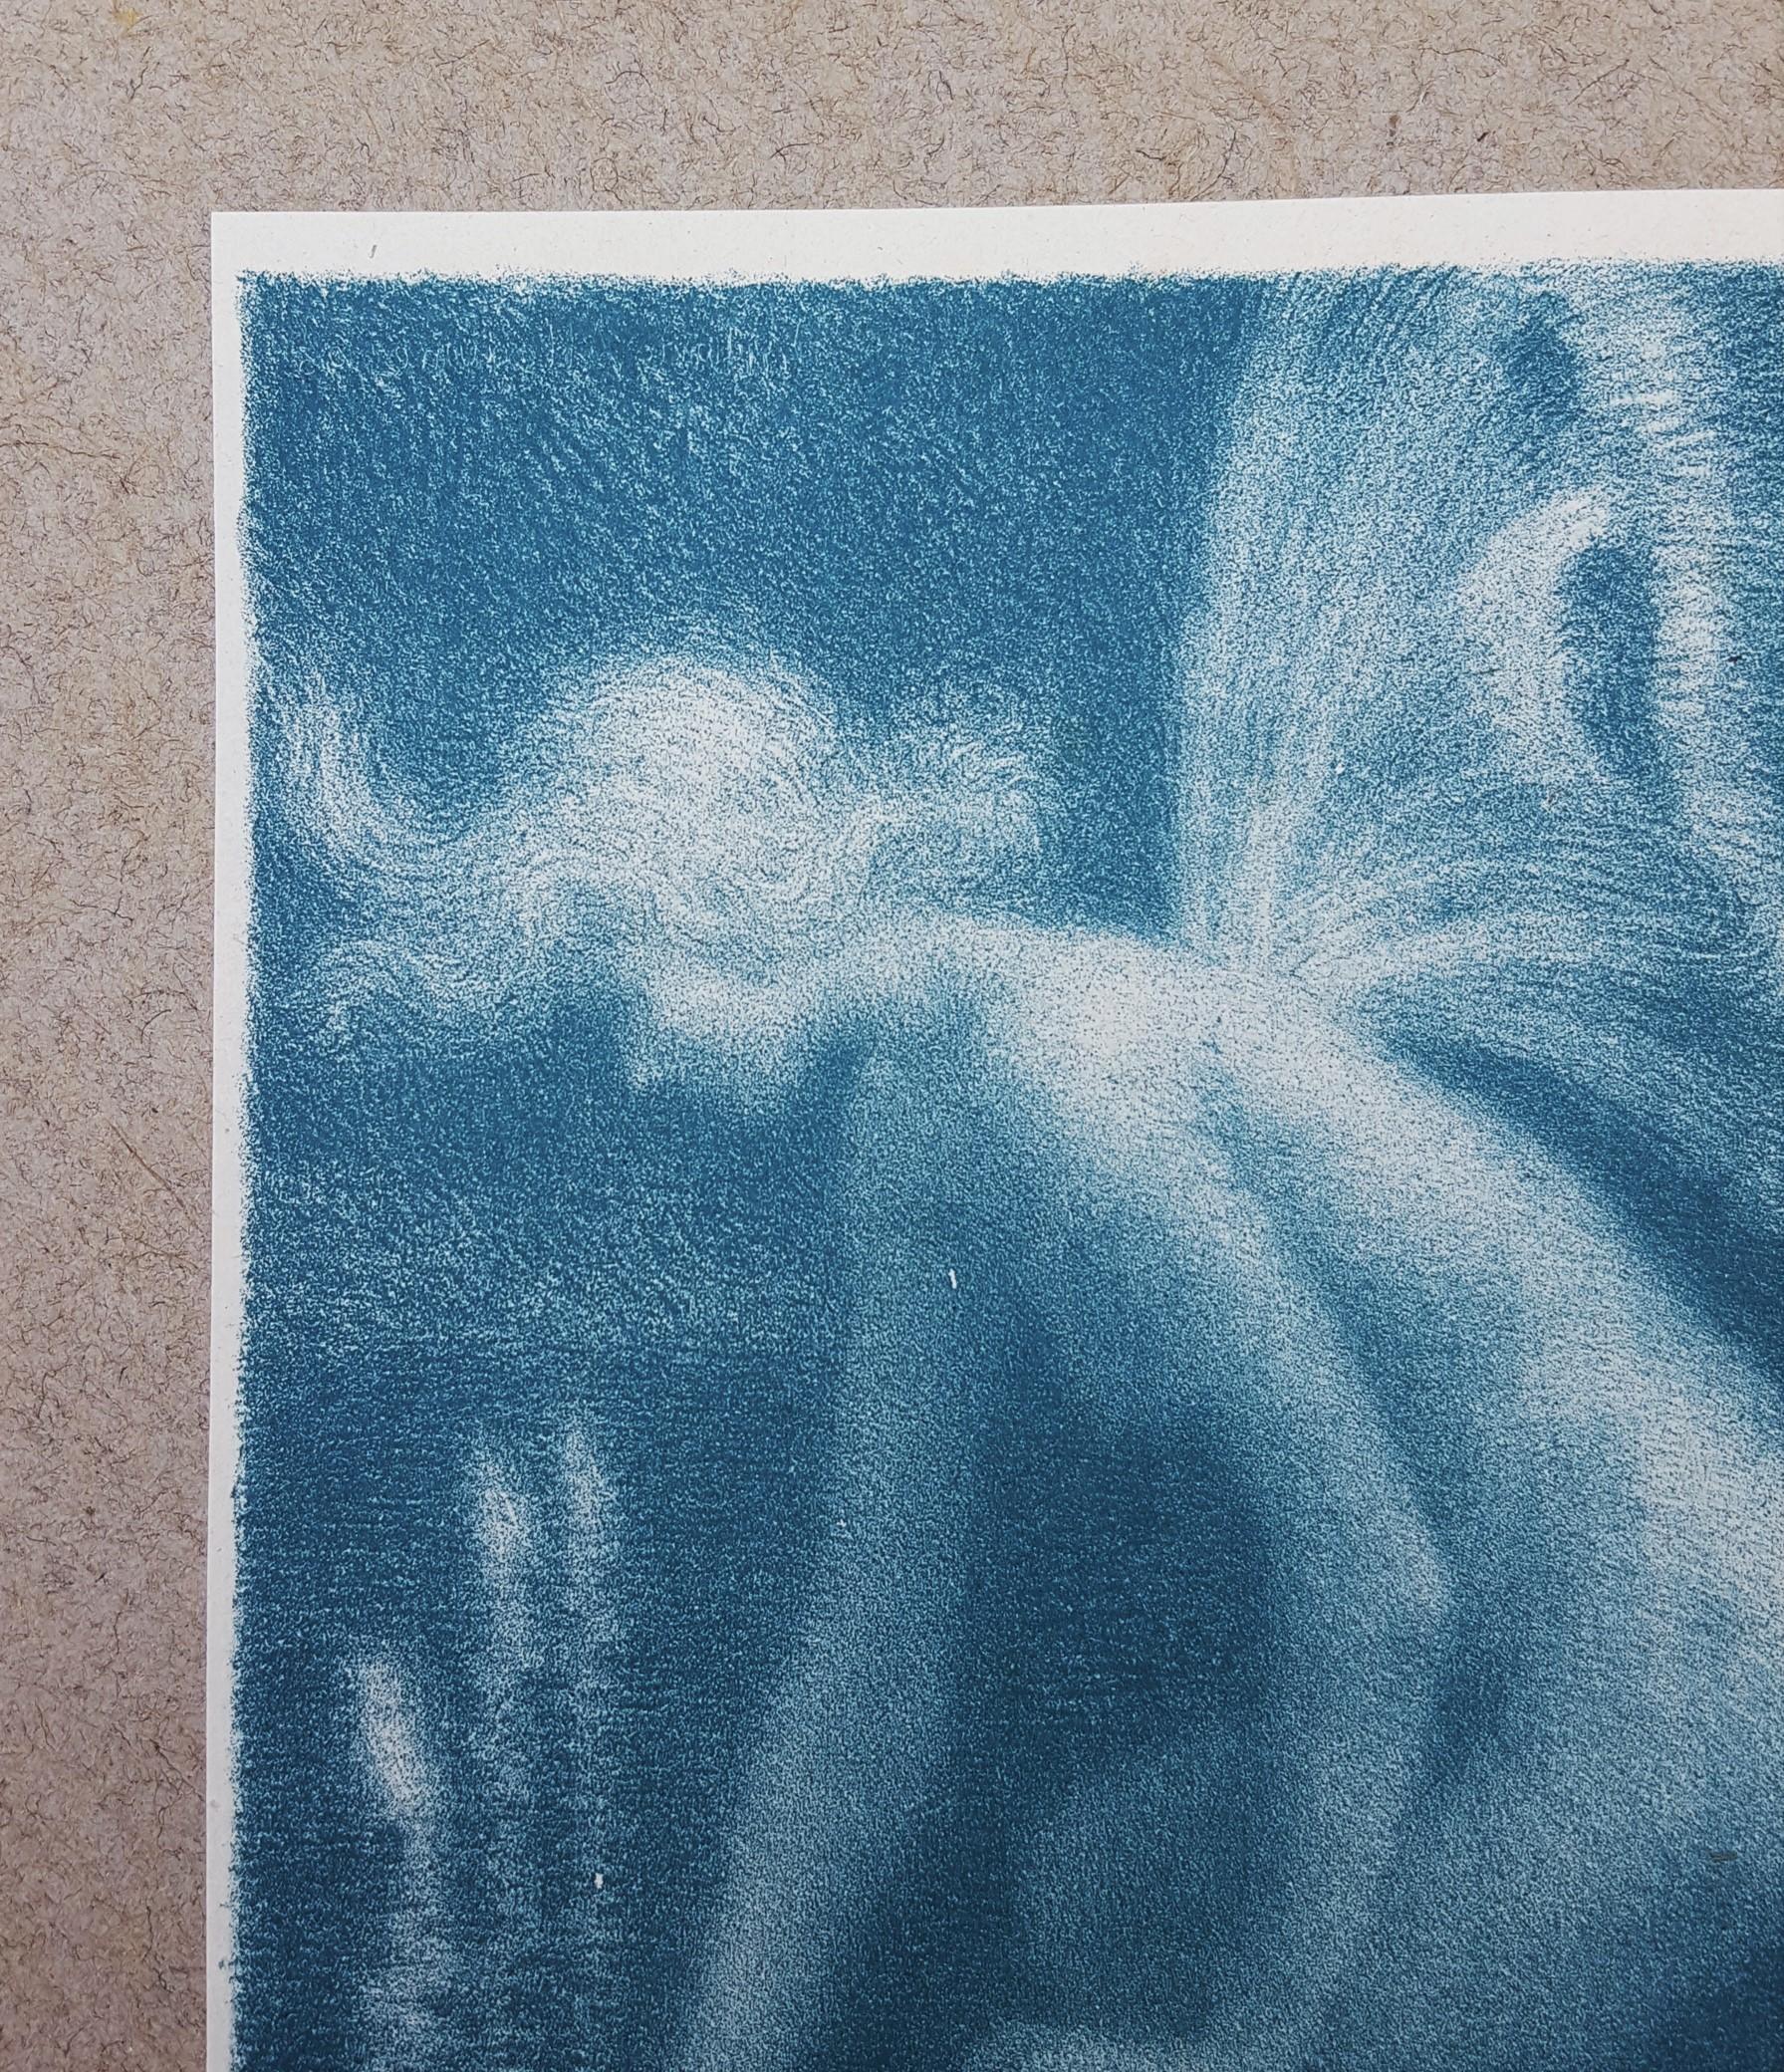 Phalene et Feux Follets - Blue Nude Print by Ludovic Alleaume